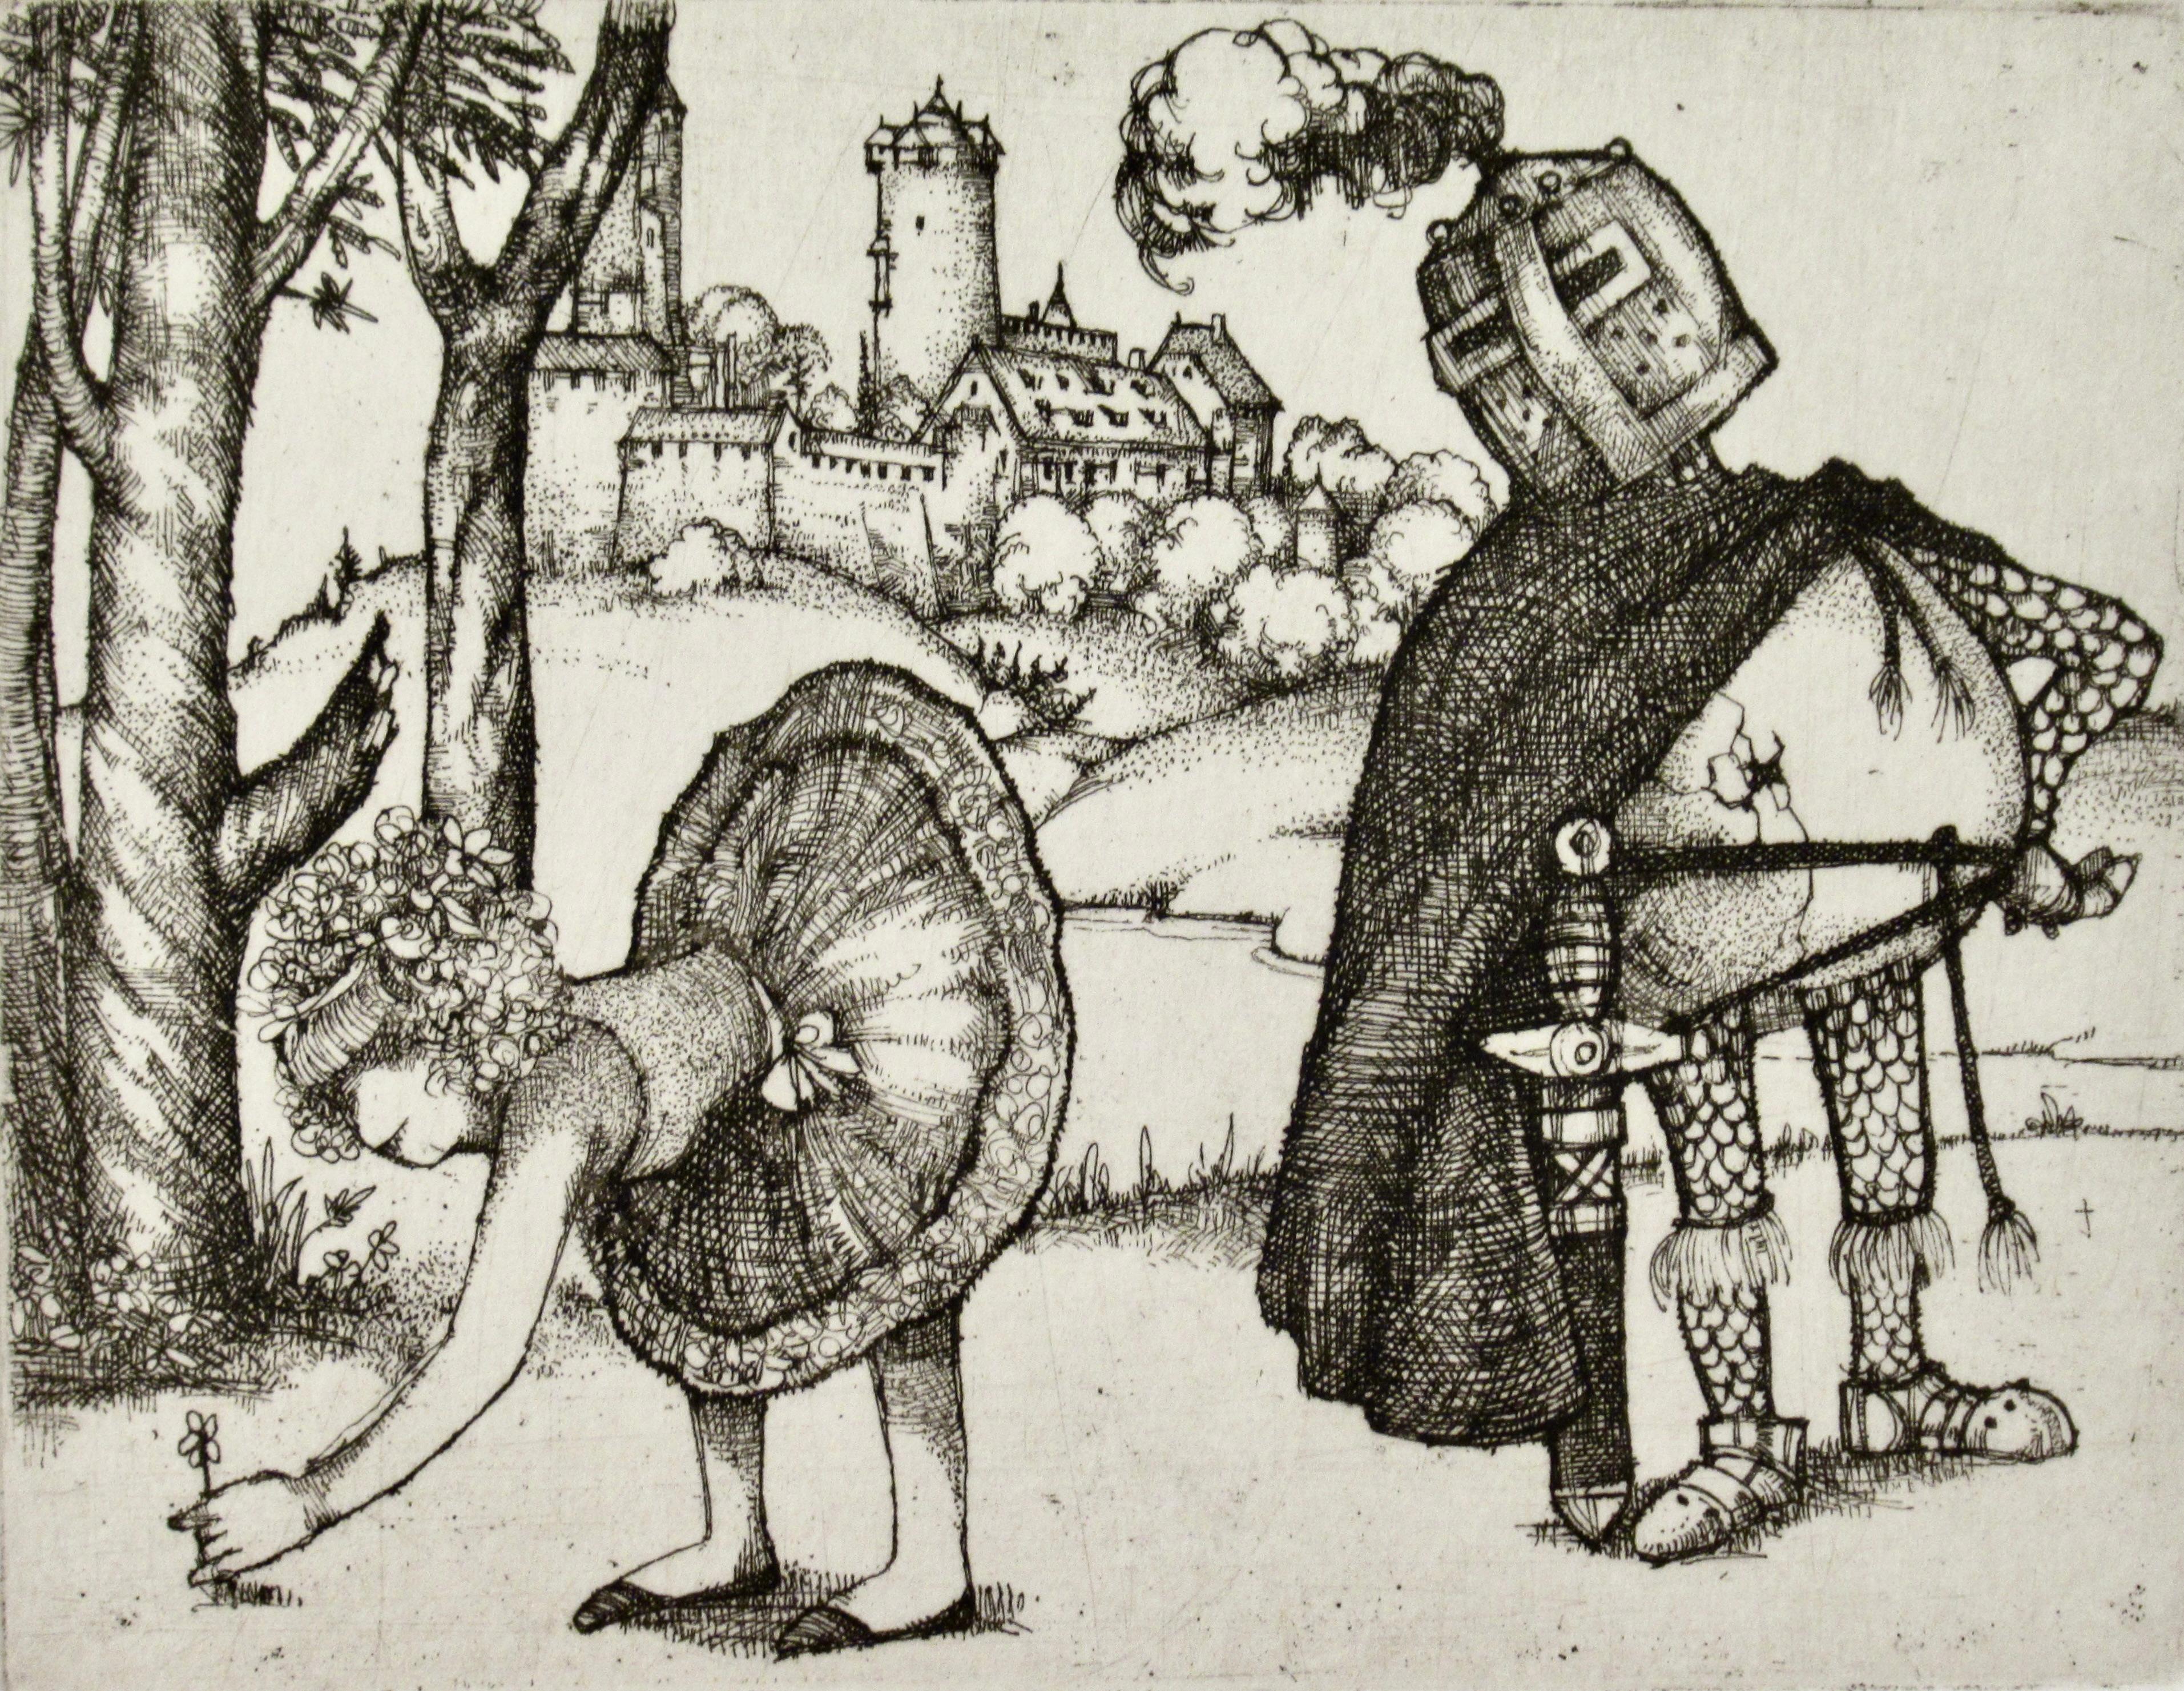 Knight Looking at a Girl - Print by Charles Bragg